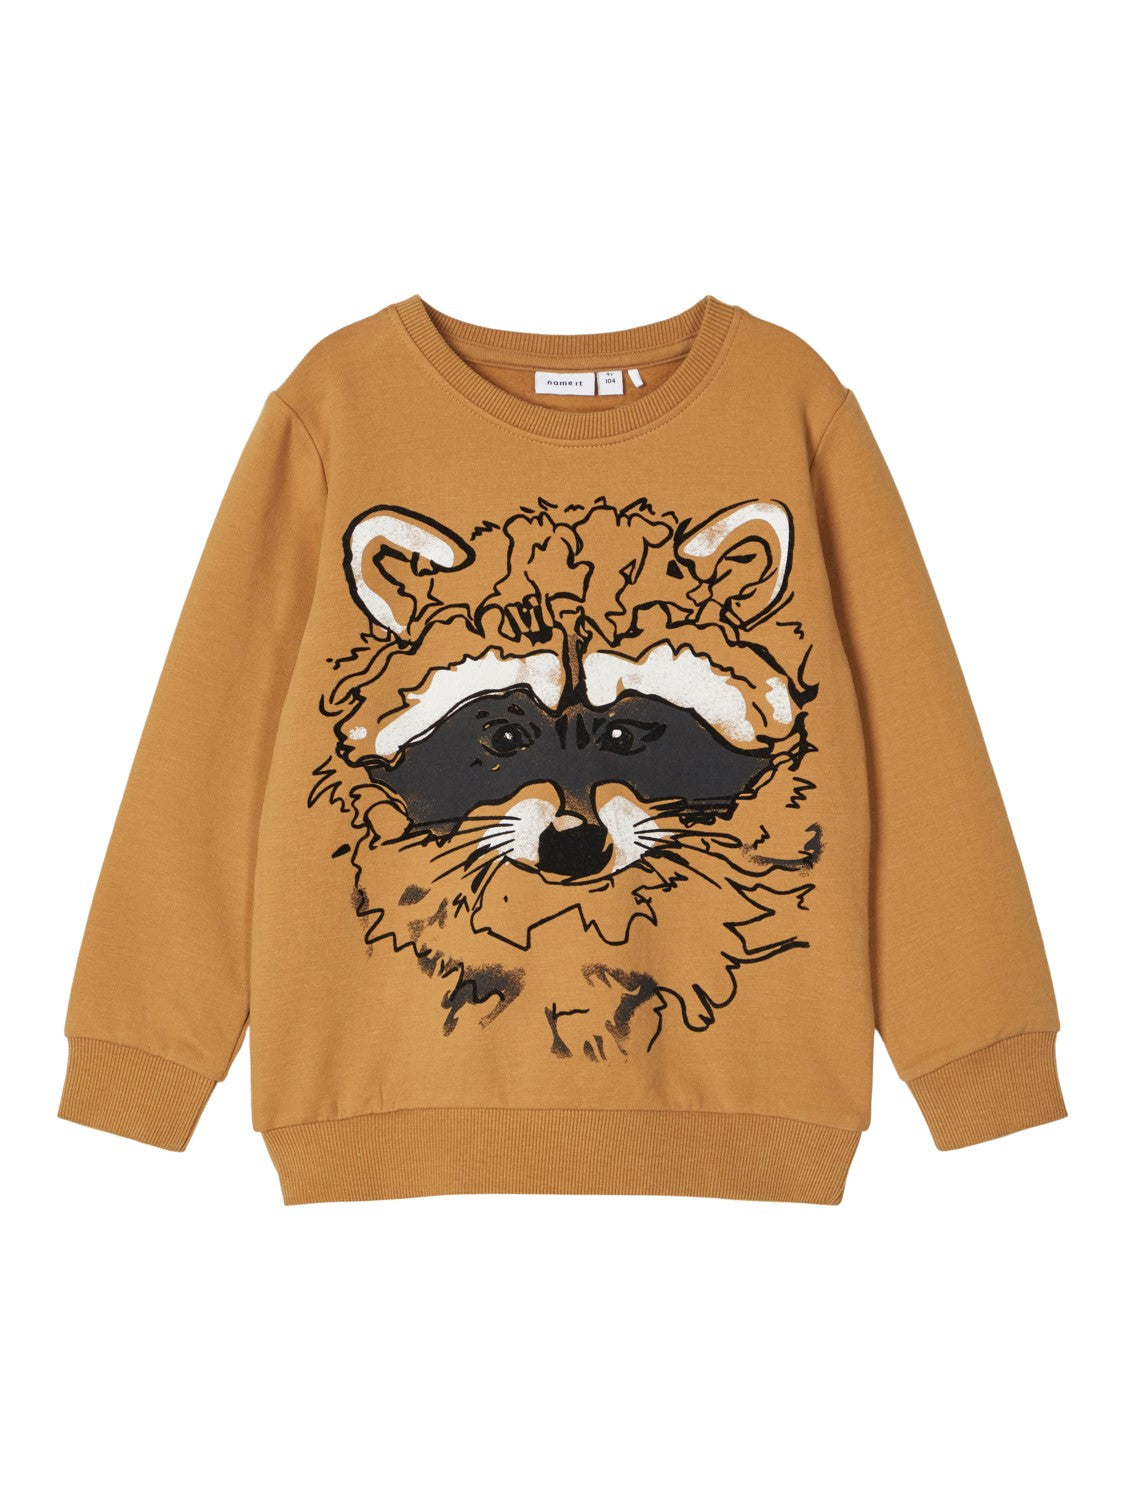 name it toddler boys bronze sweatshirt with raccoon graphic